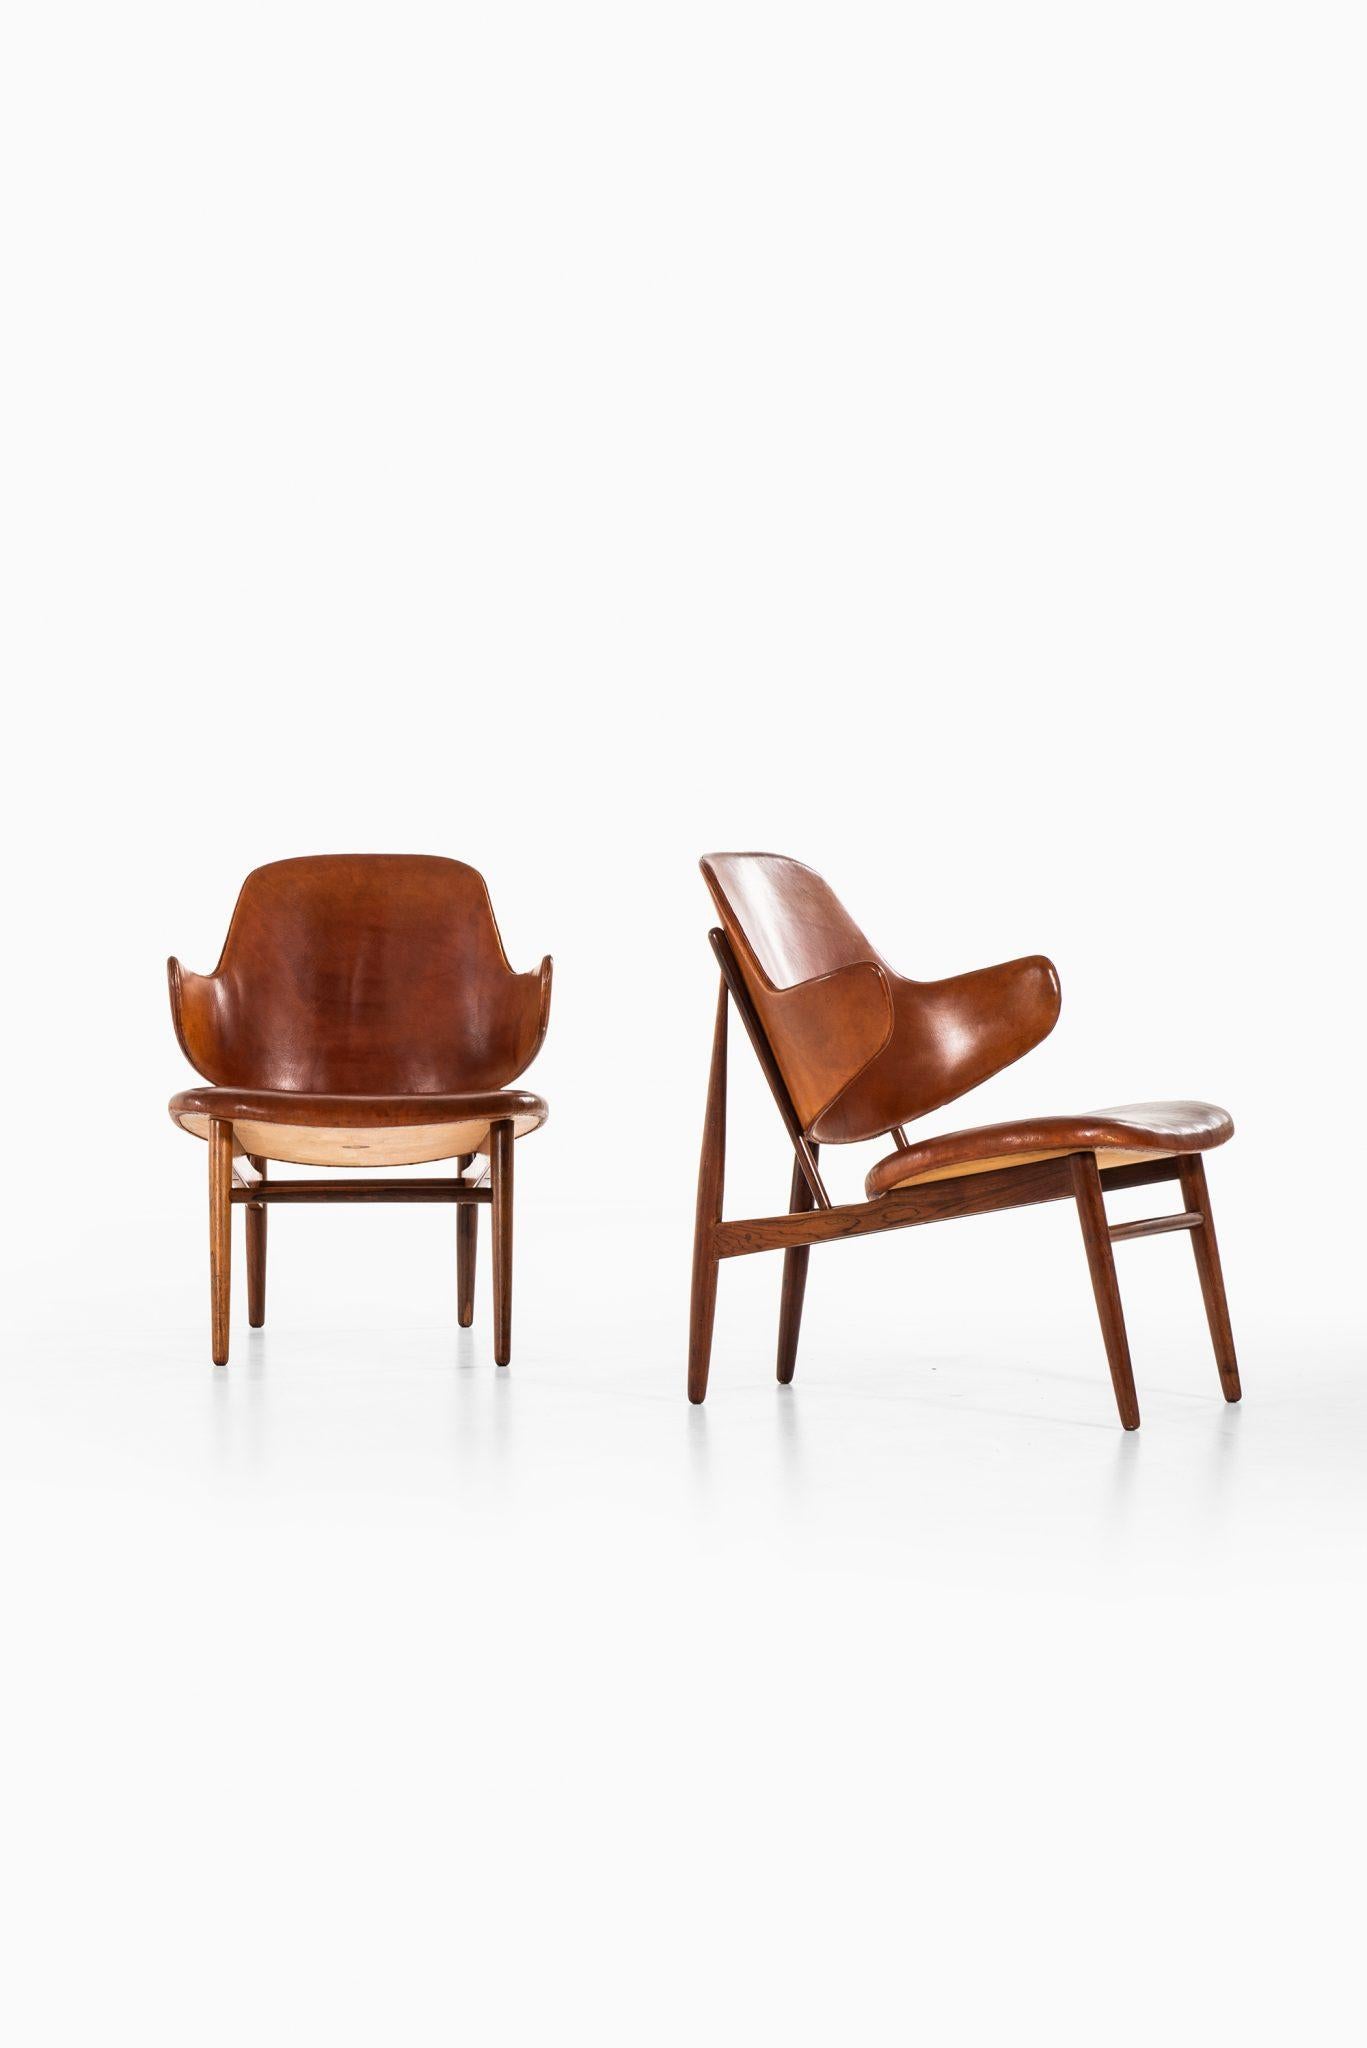 Very rare pair of easy chairs model DP 9 designed by Ib Kofod-Larsen. Produced by Christensen & Larsen in Denmark.